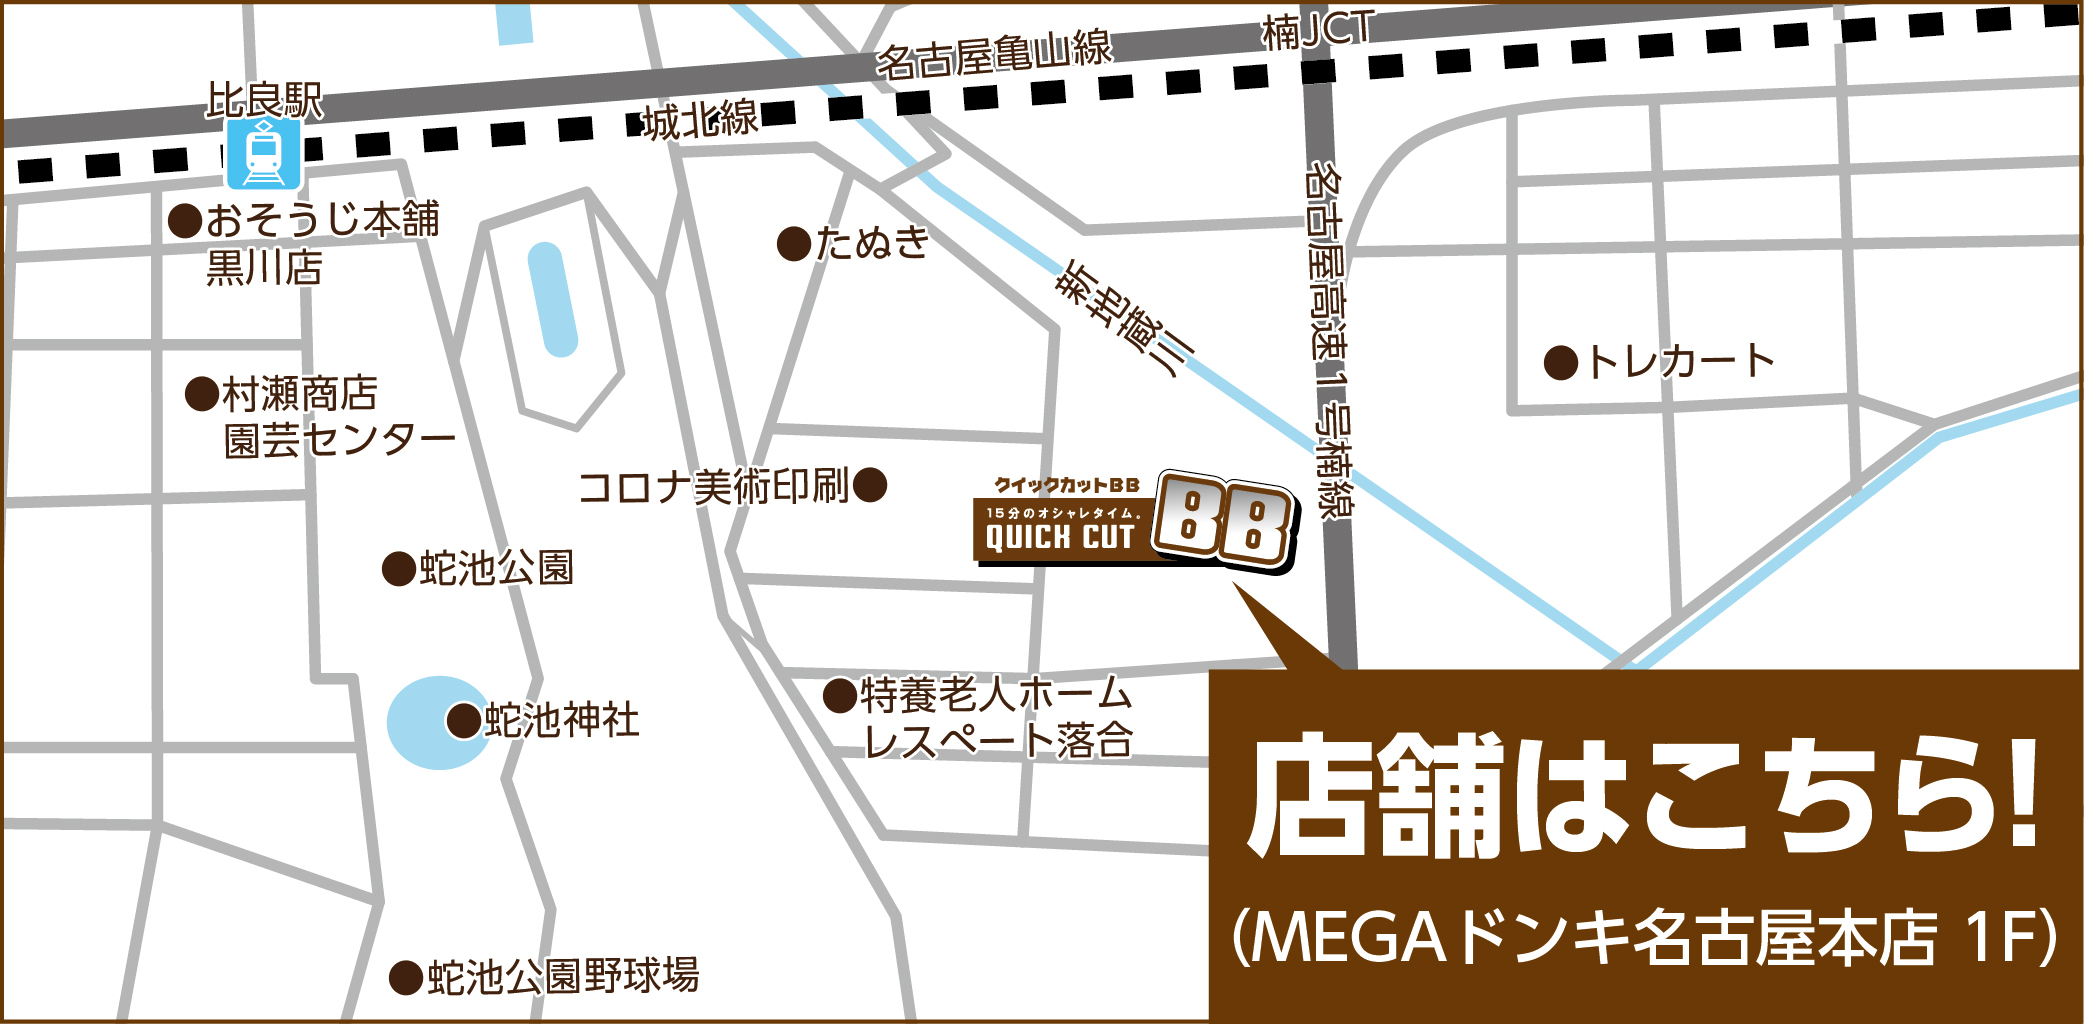 MEGAドン・キホーテ 名古屋本店 簡易地図